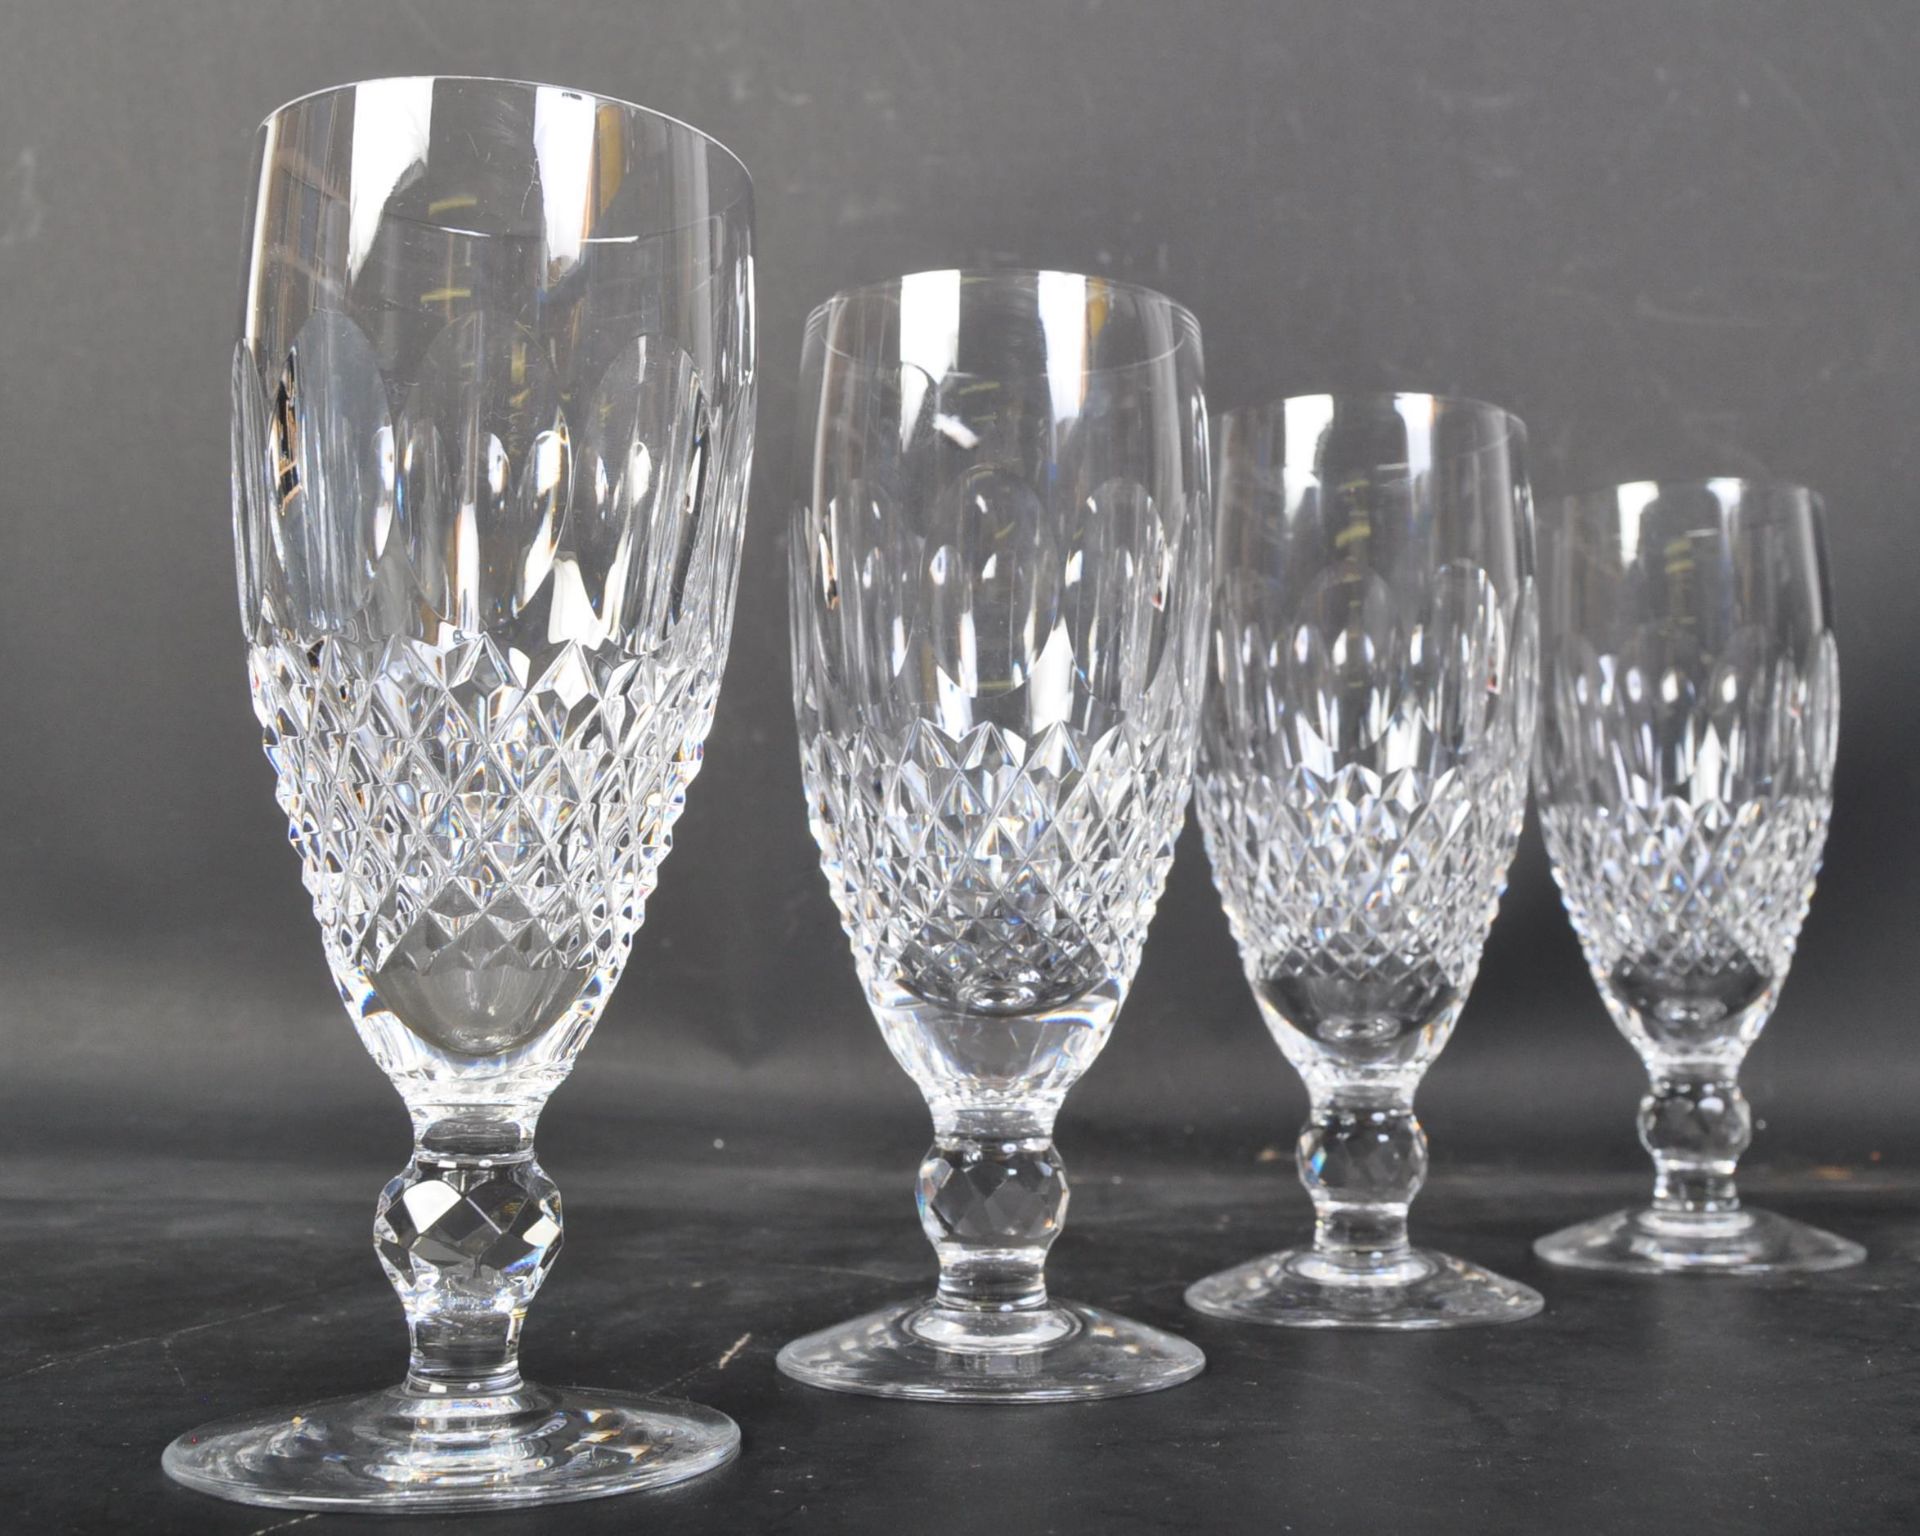 SIX VINTAGE WATERFORD CRYSTAL 'LISMORE' PILSNER GLASSES - Image 3 of 5